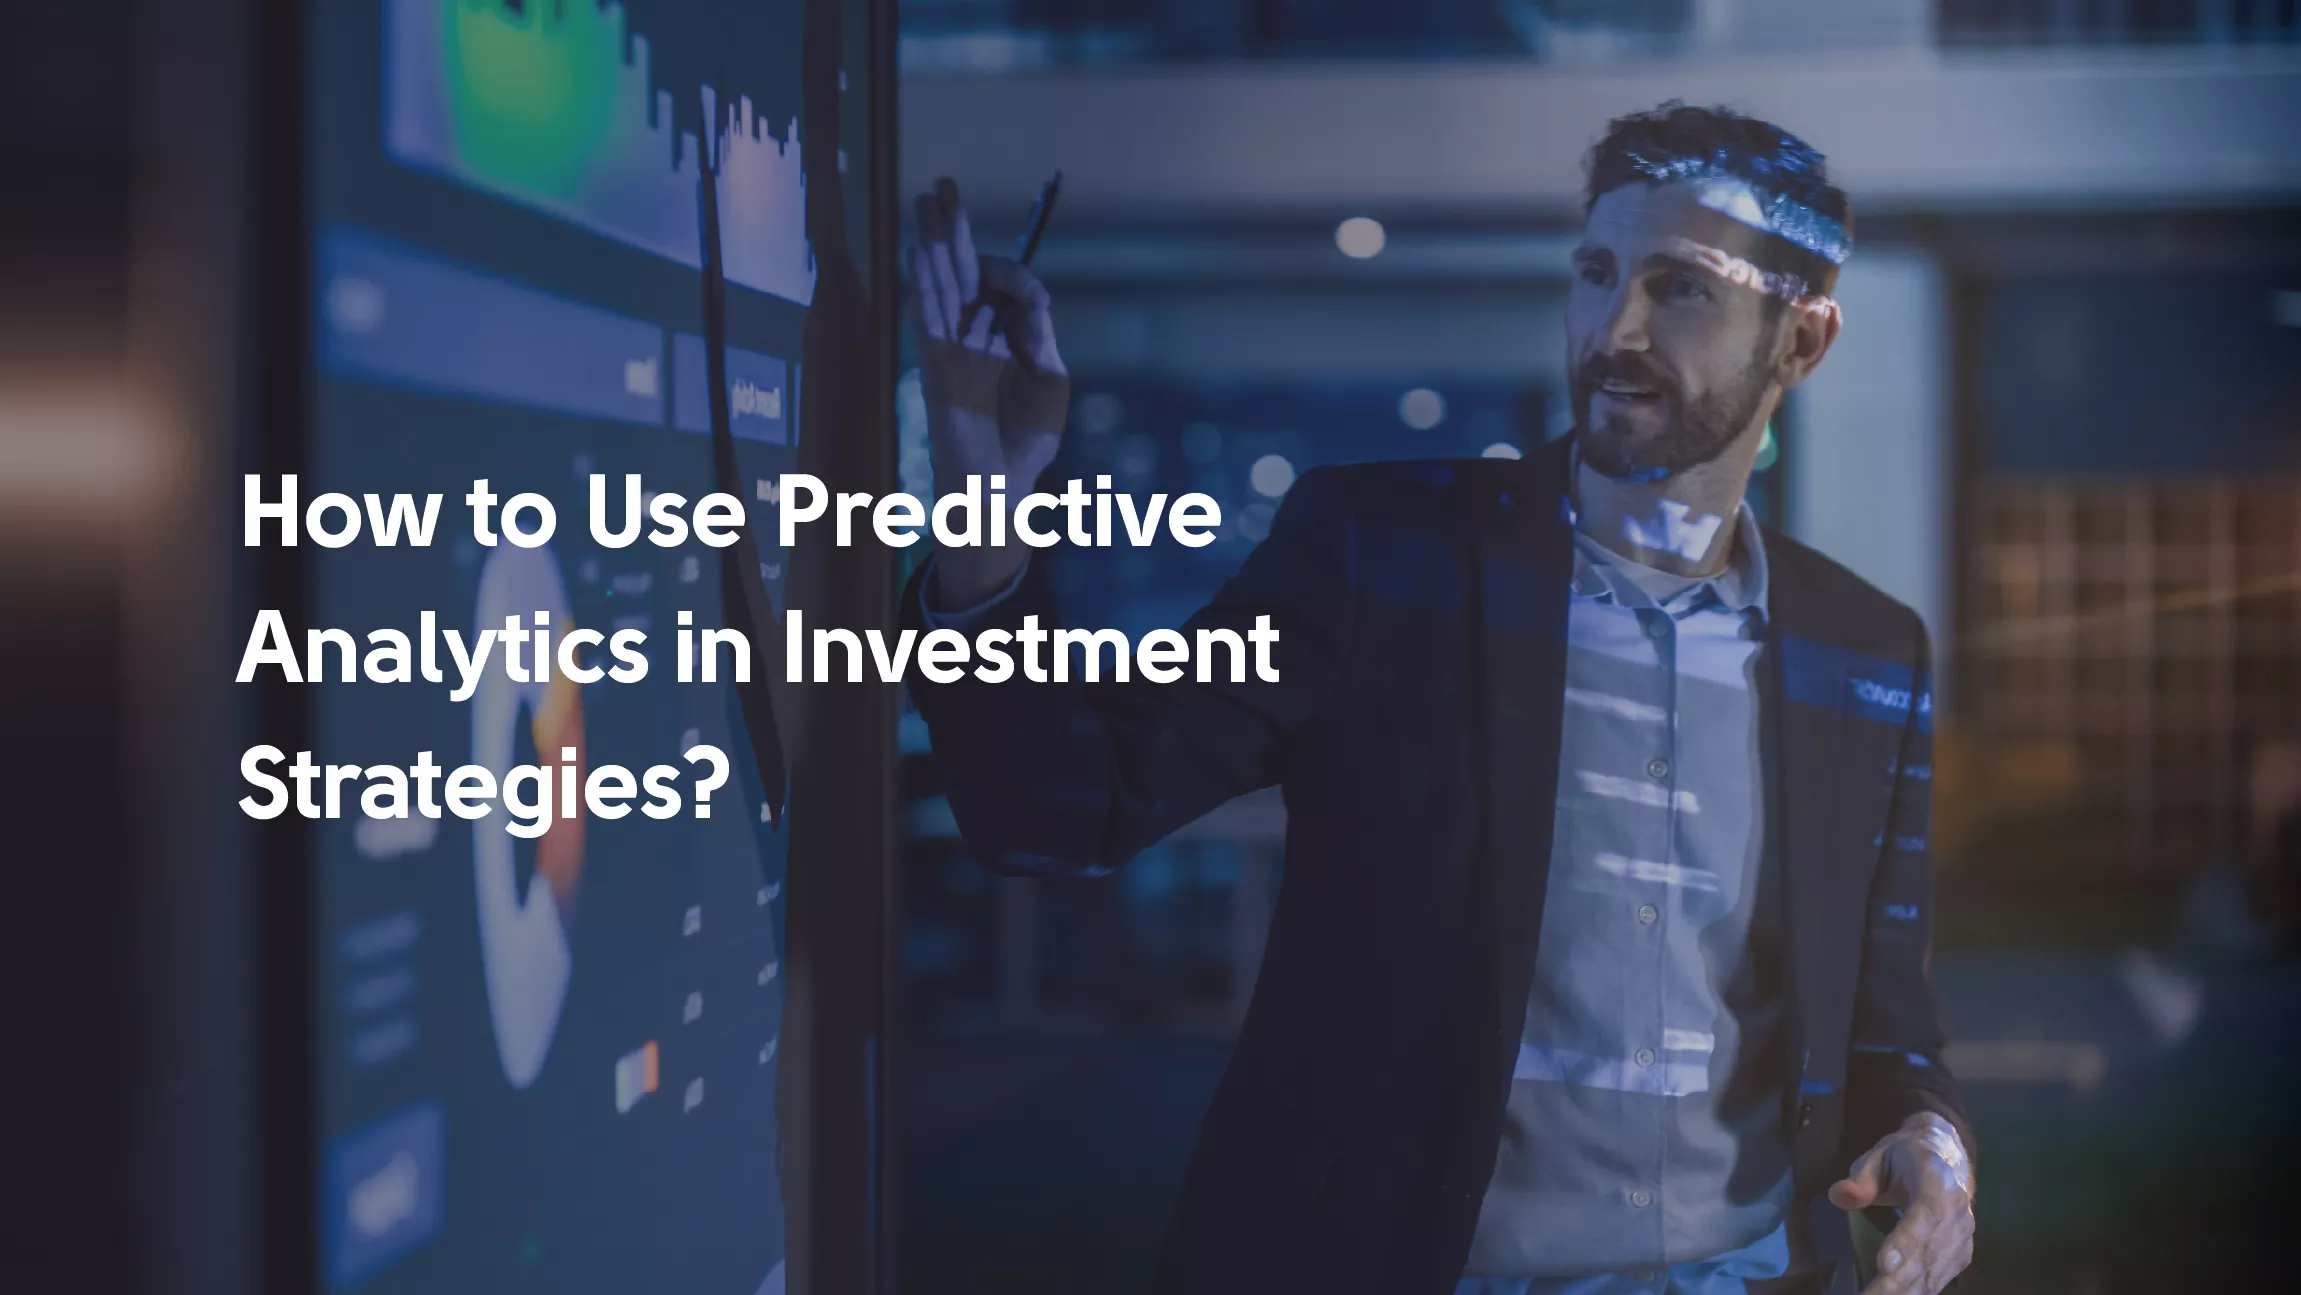 predictive analytics in investment management